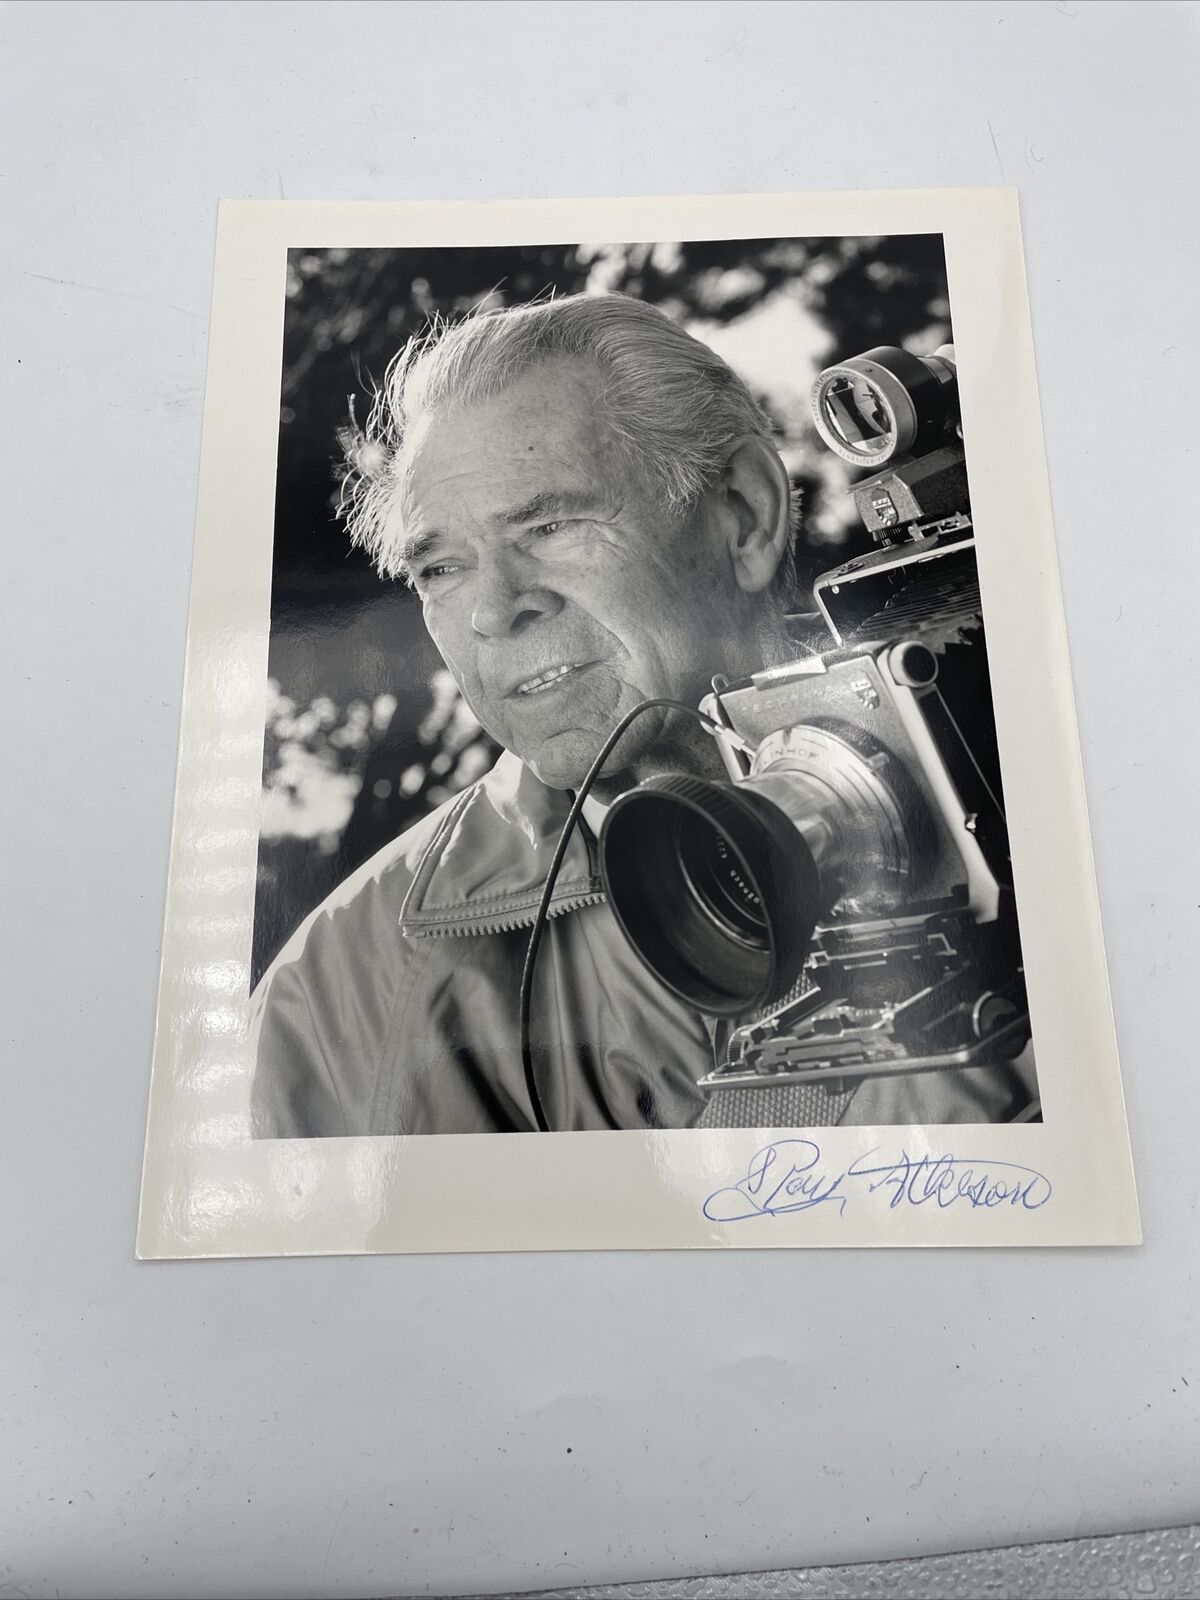 Ray Atkeson Self Portrait Autographed Scenic Photographer Black White Autograph